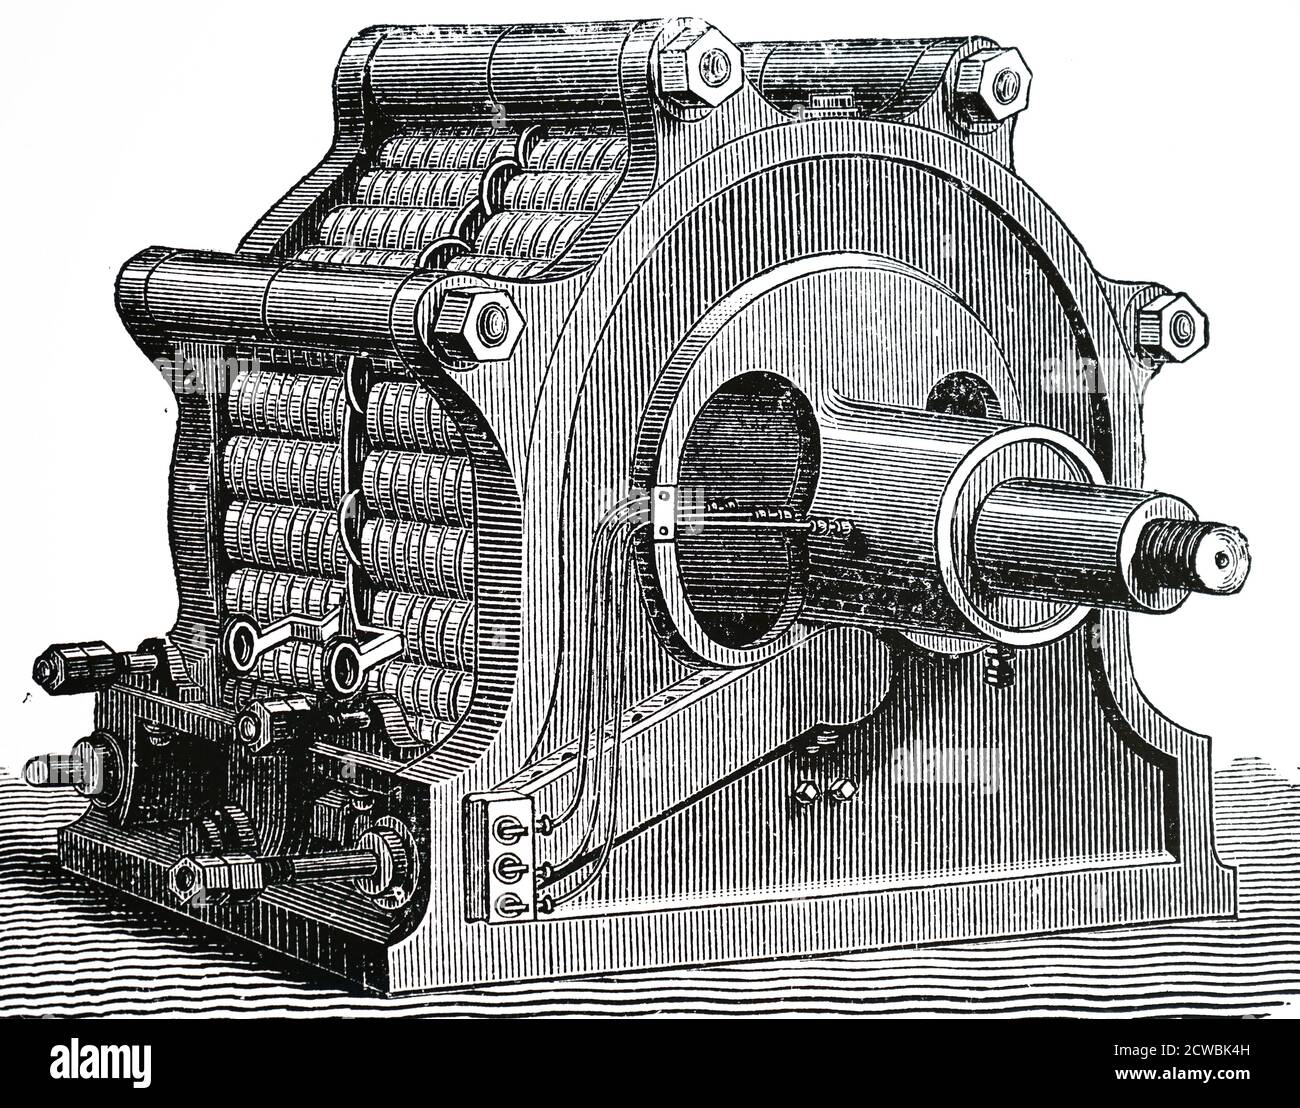 Engraving depicting a Ferranti-Thomson single-phase alternator (1884). Developed by William Thomson (Lord Kelvin), S. Z. de Ferranti and Alfred Thomson. Stock Photo